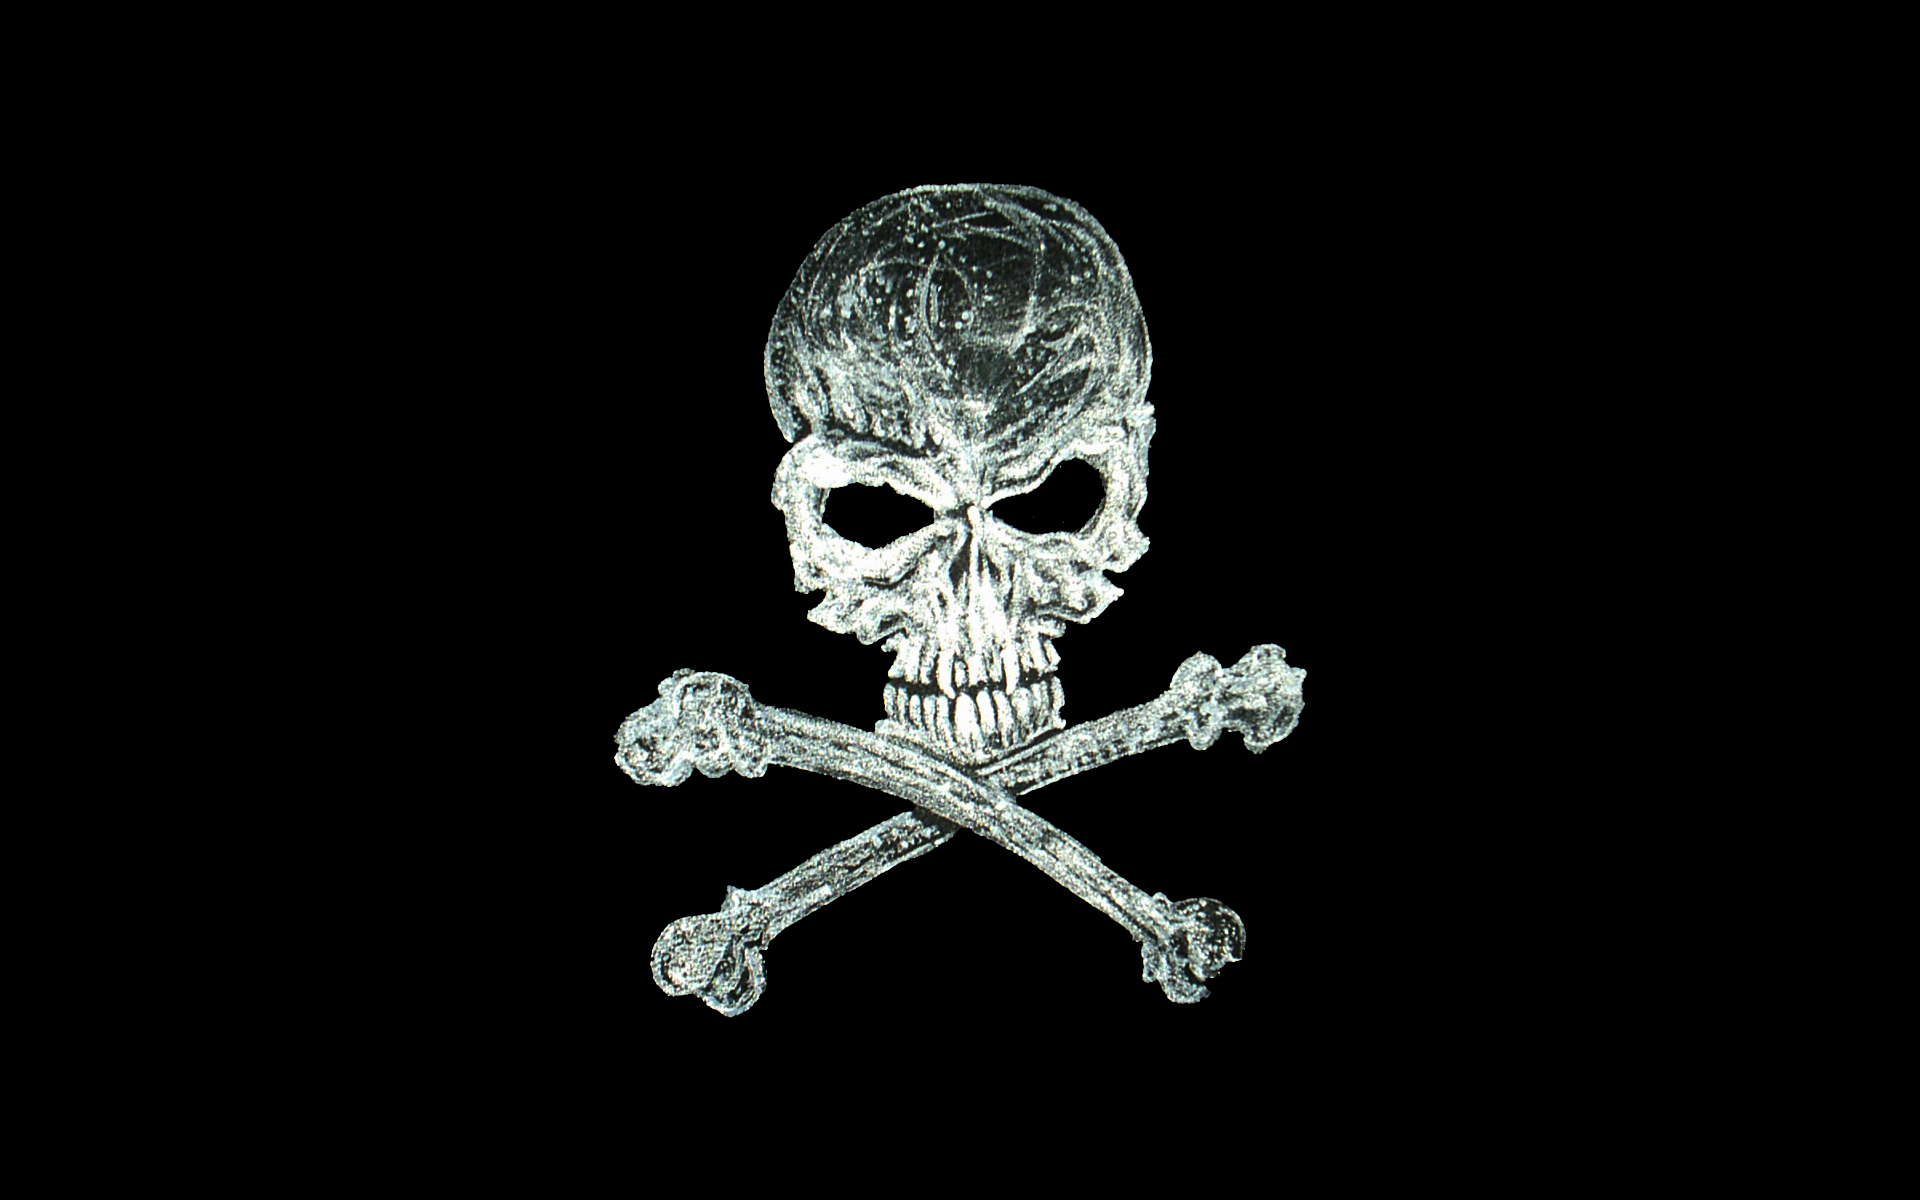 Black And White Skulls Wallpaper Skull Pirates